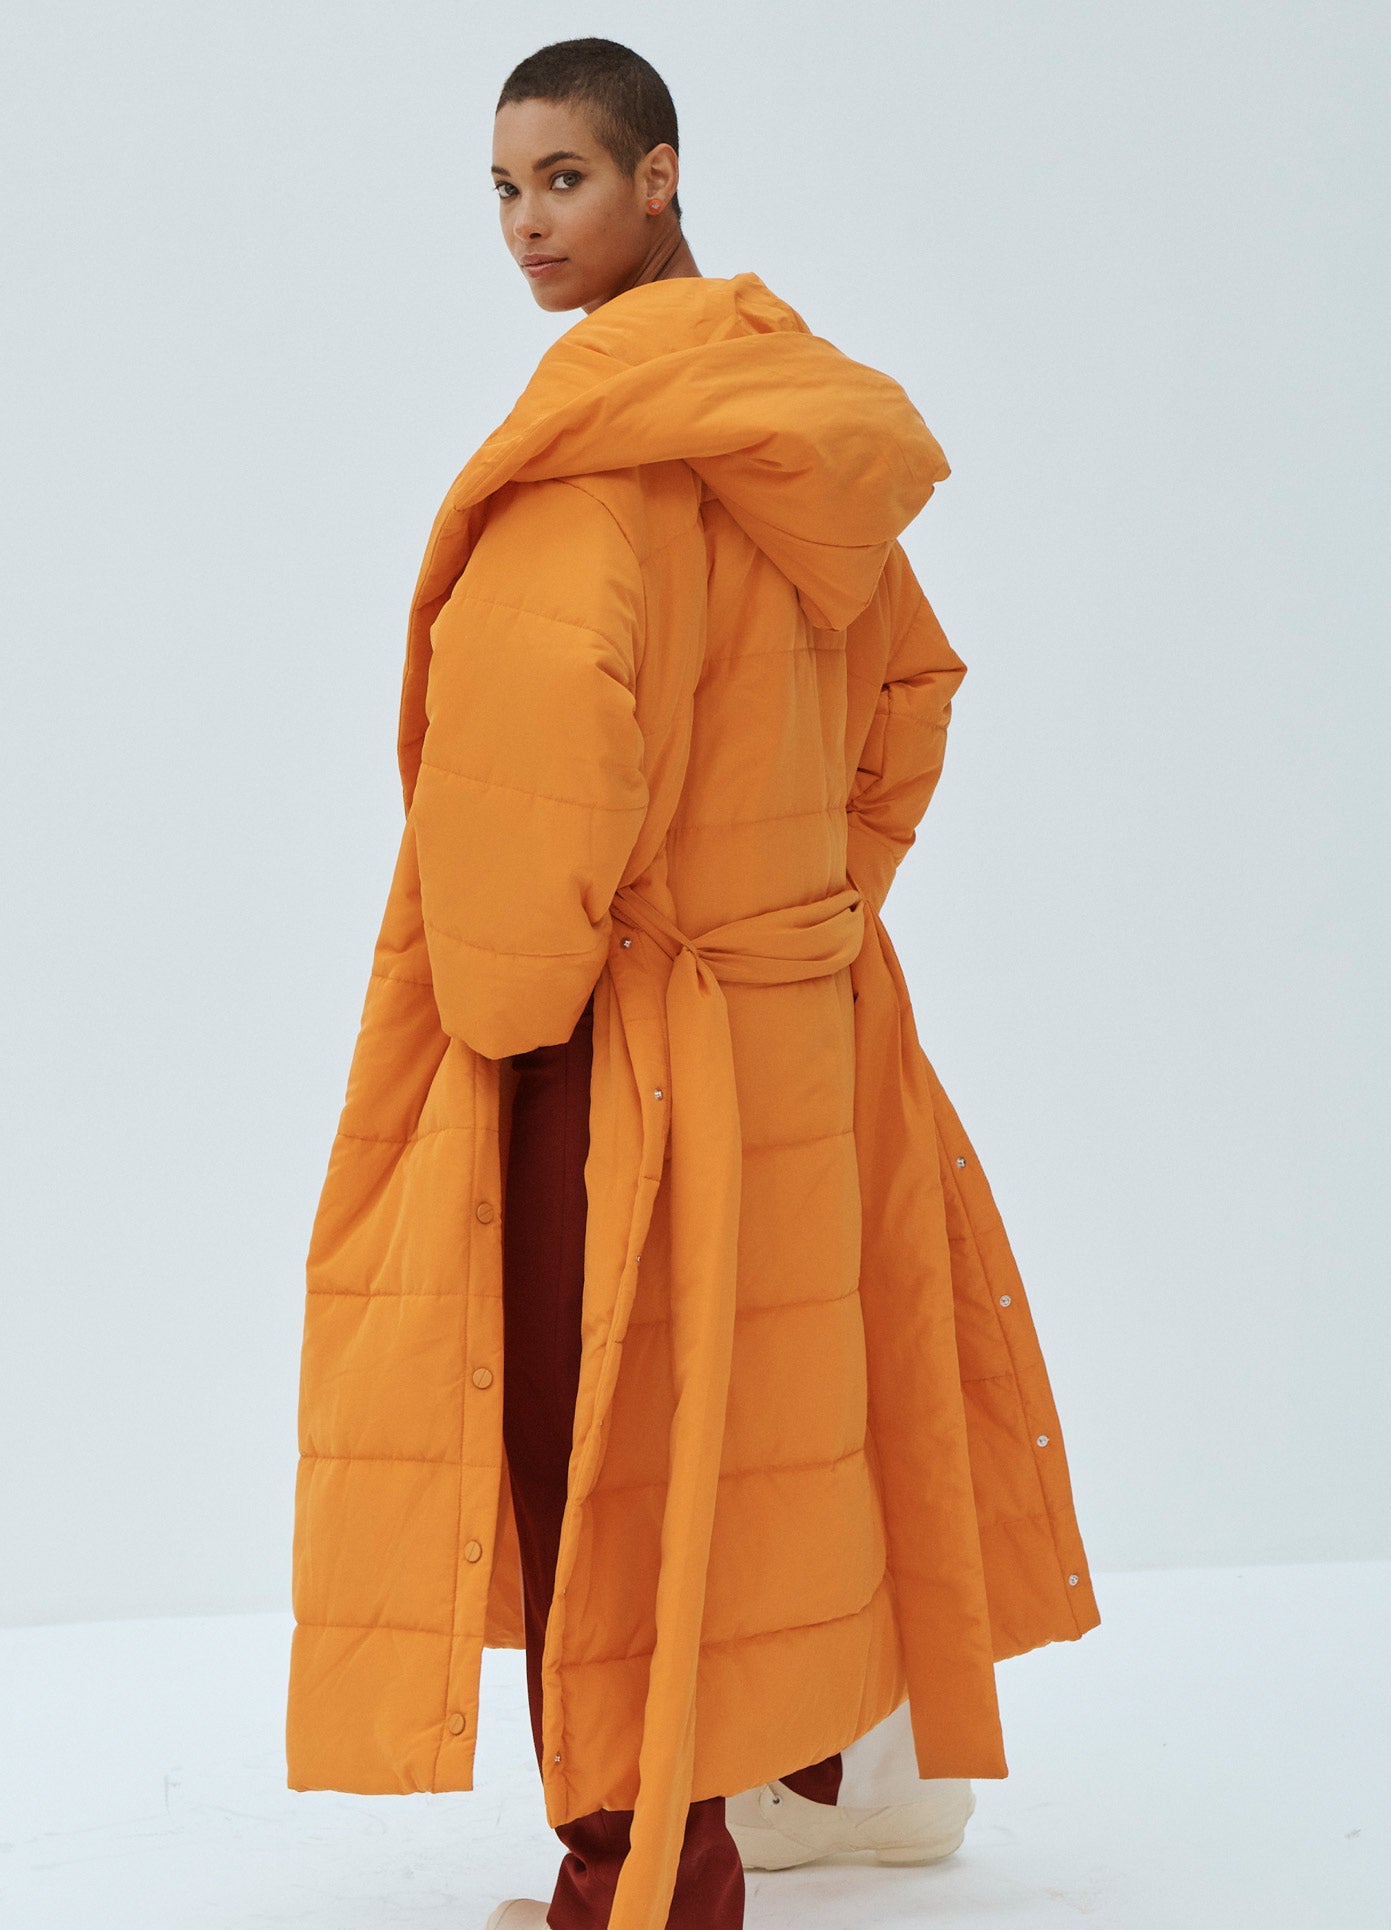 MONSE Techno Puffer Robe in Orange on Model Back View